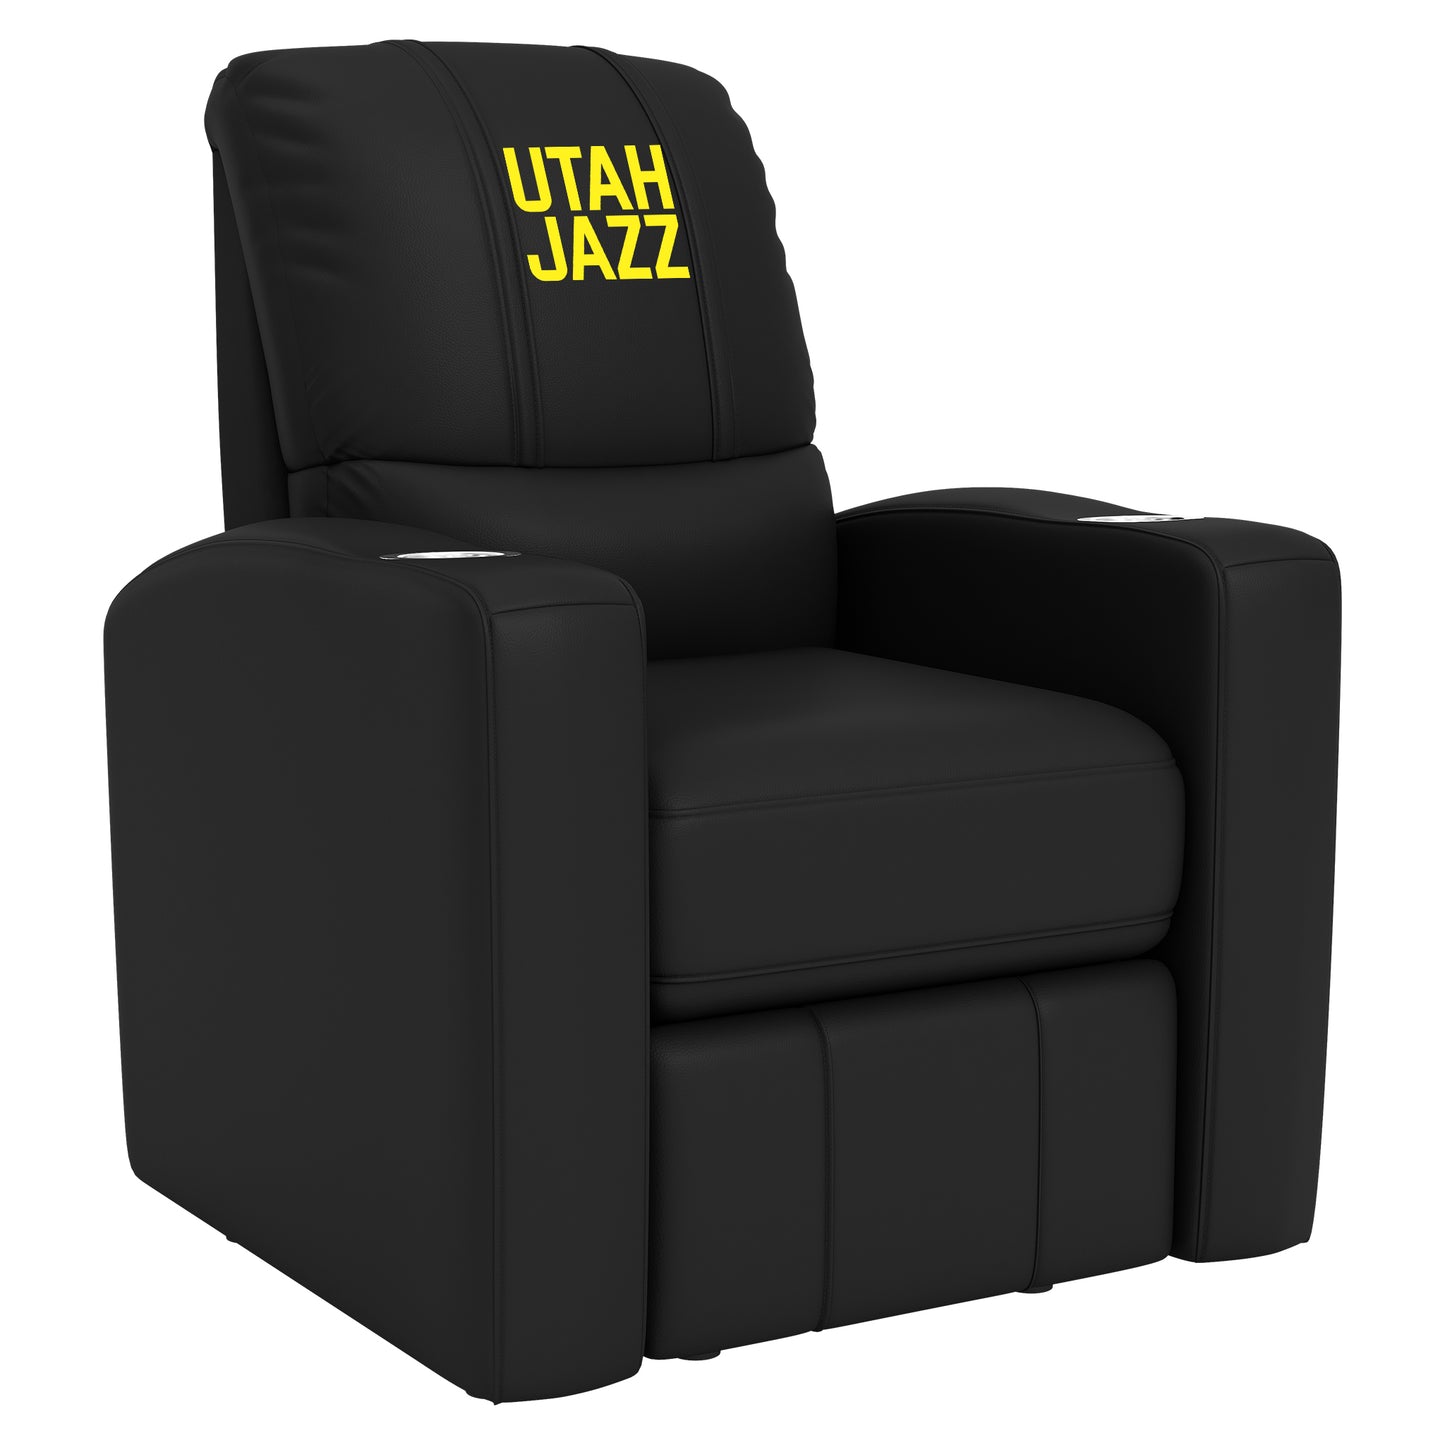 Stealth Recliner with Utah Jazz Wordmark Logo